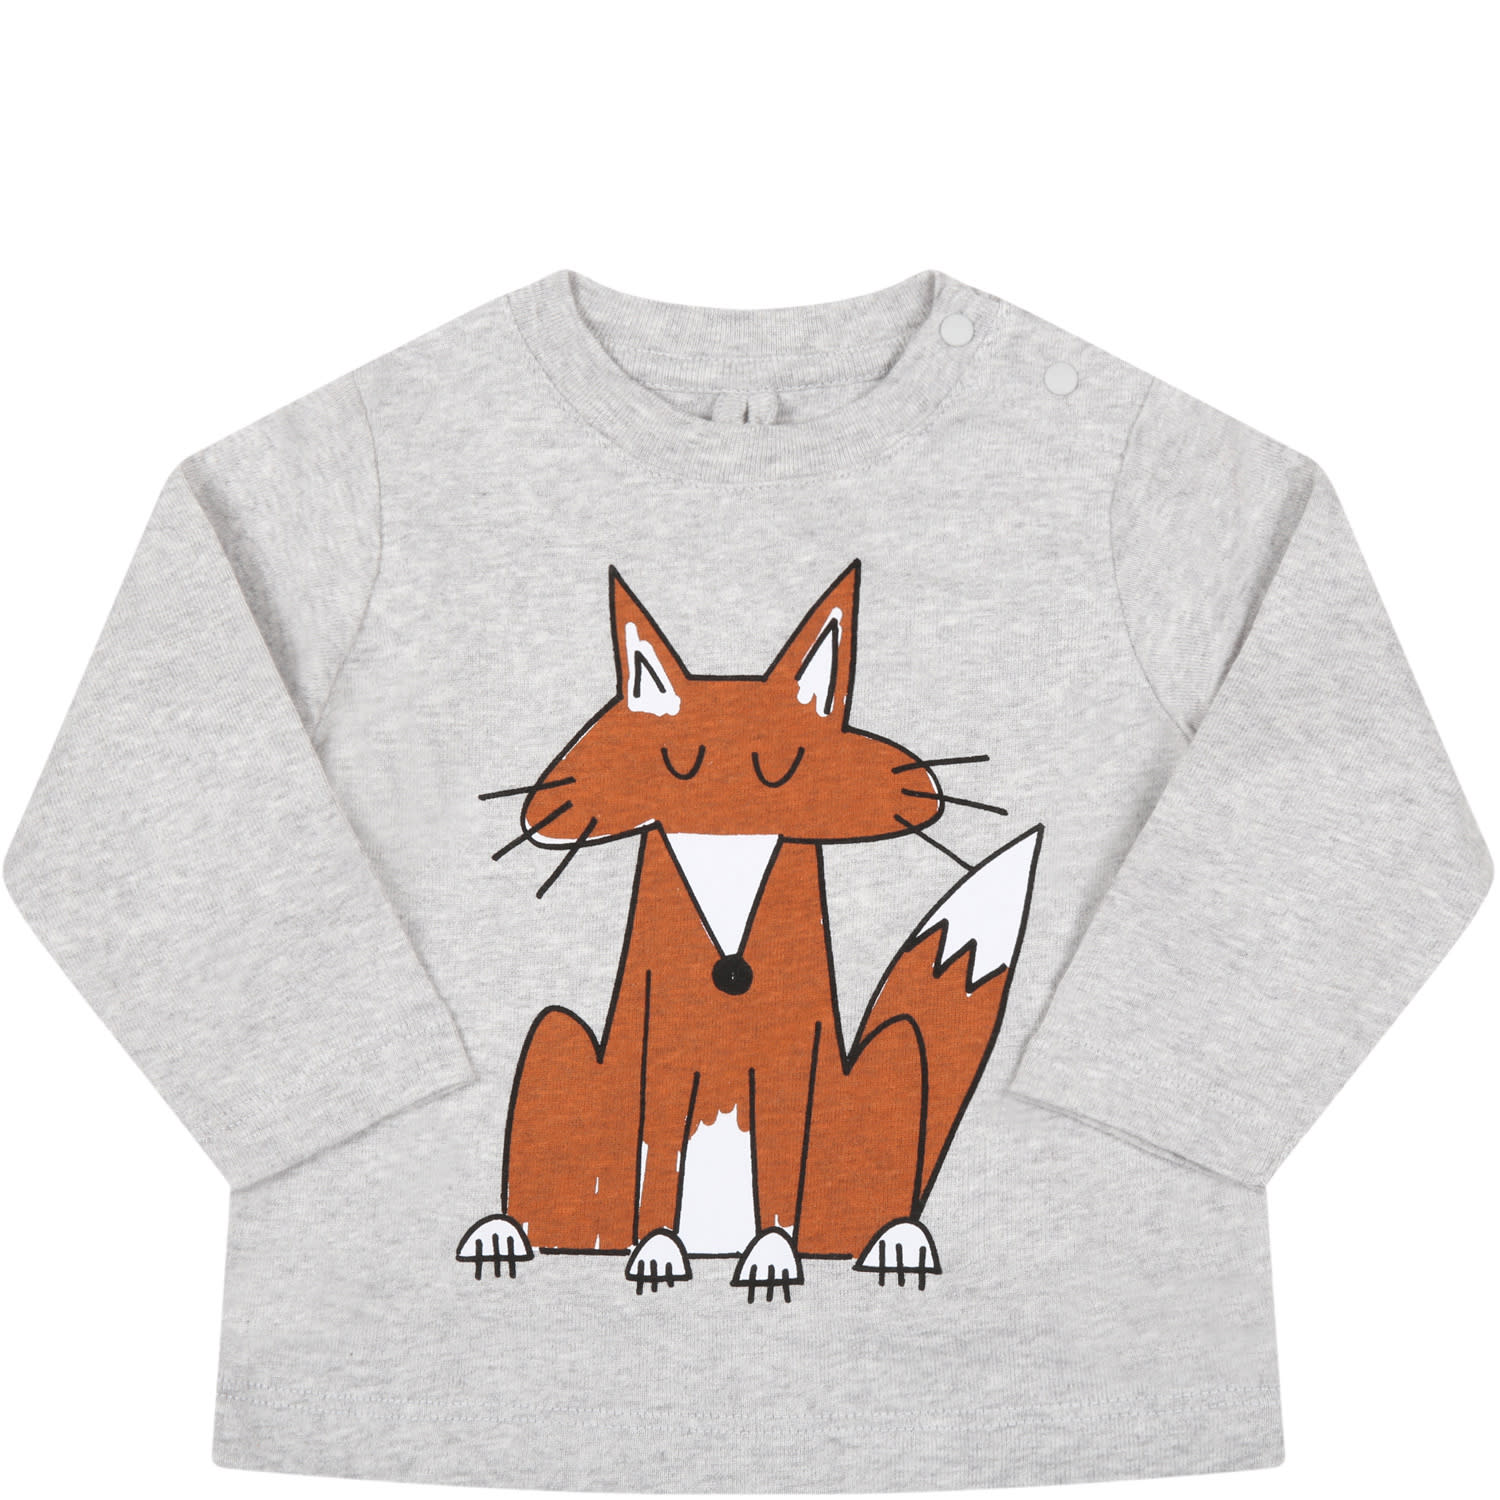 Stella McCartney Kids Grey T-shirt For Baby Kids With Fox